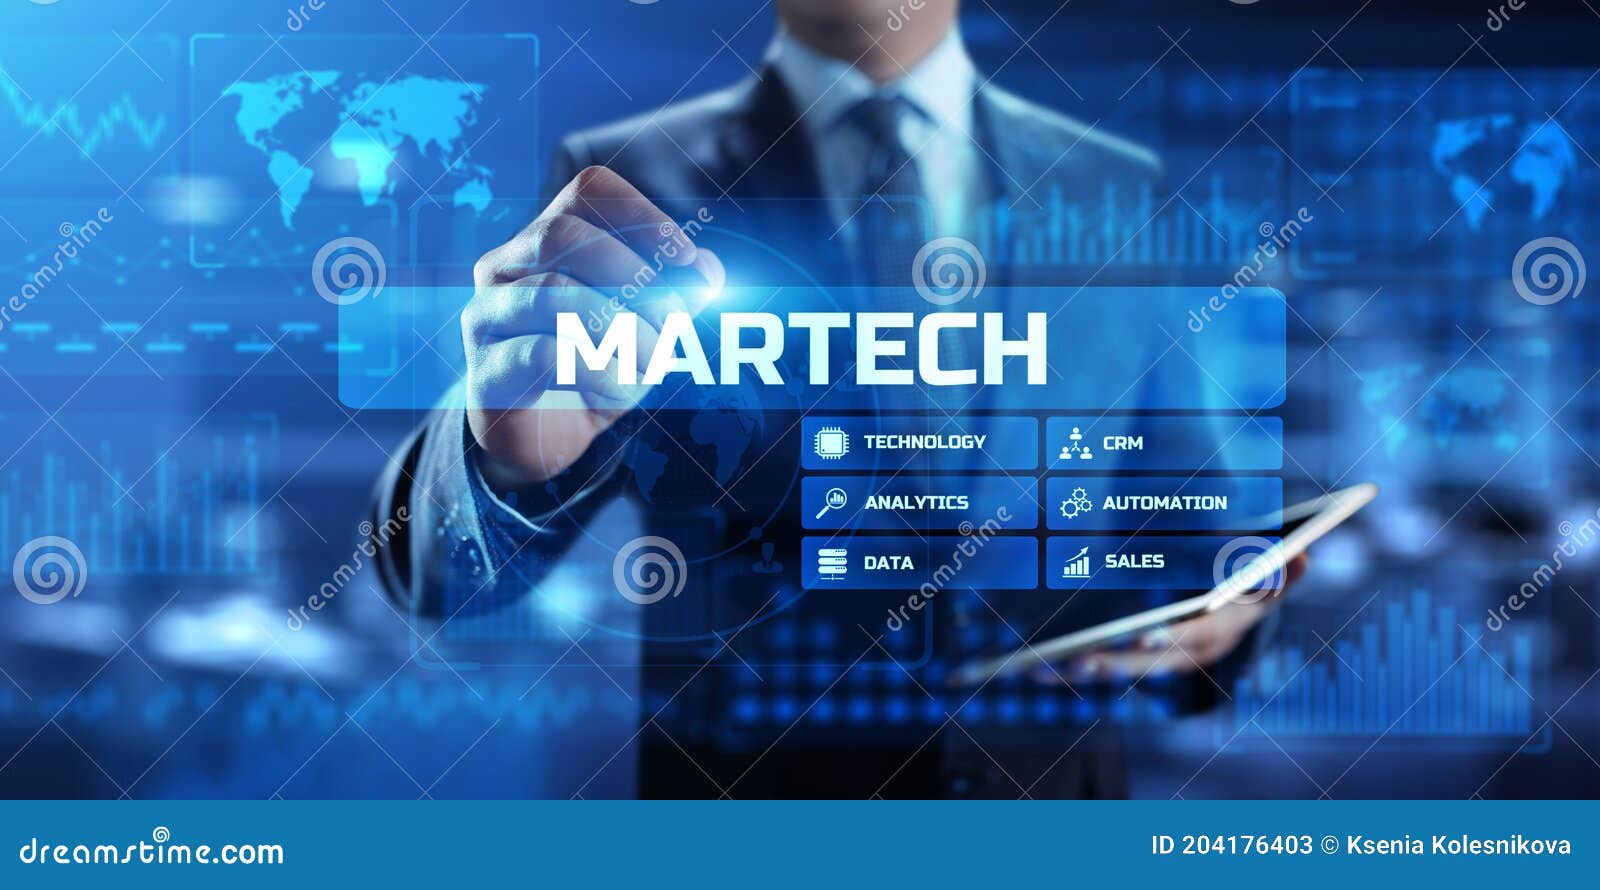 martech, marketing technology business concept on virtual screen dashboard.